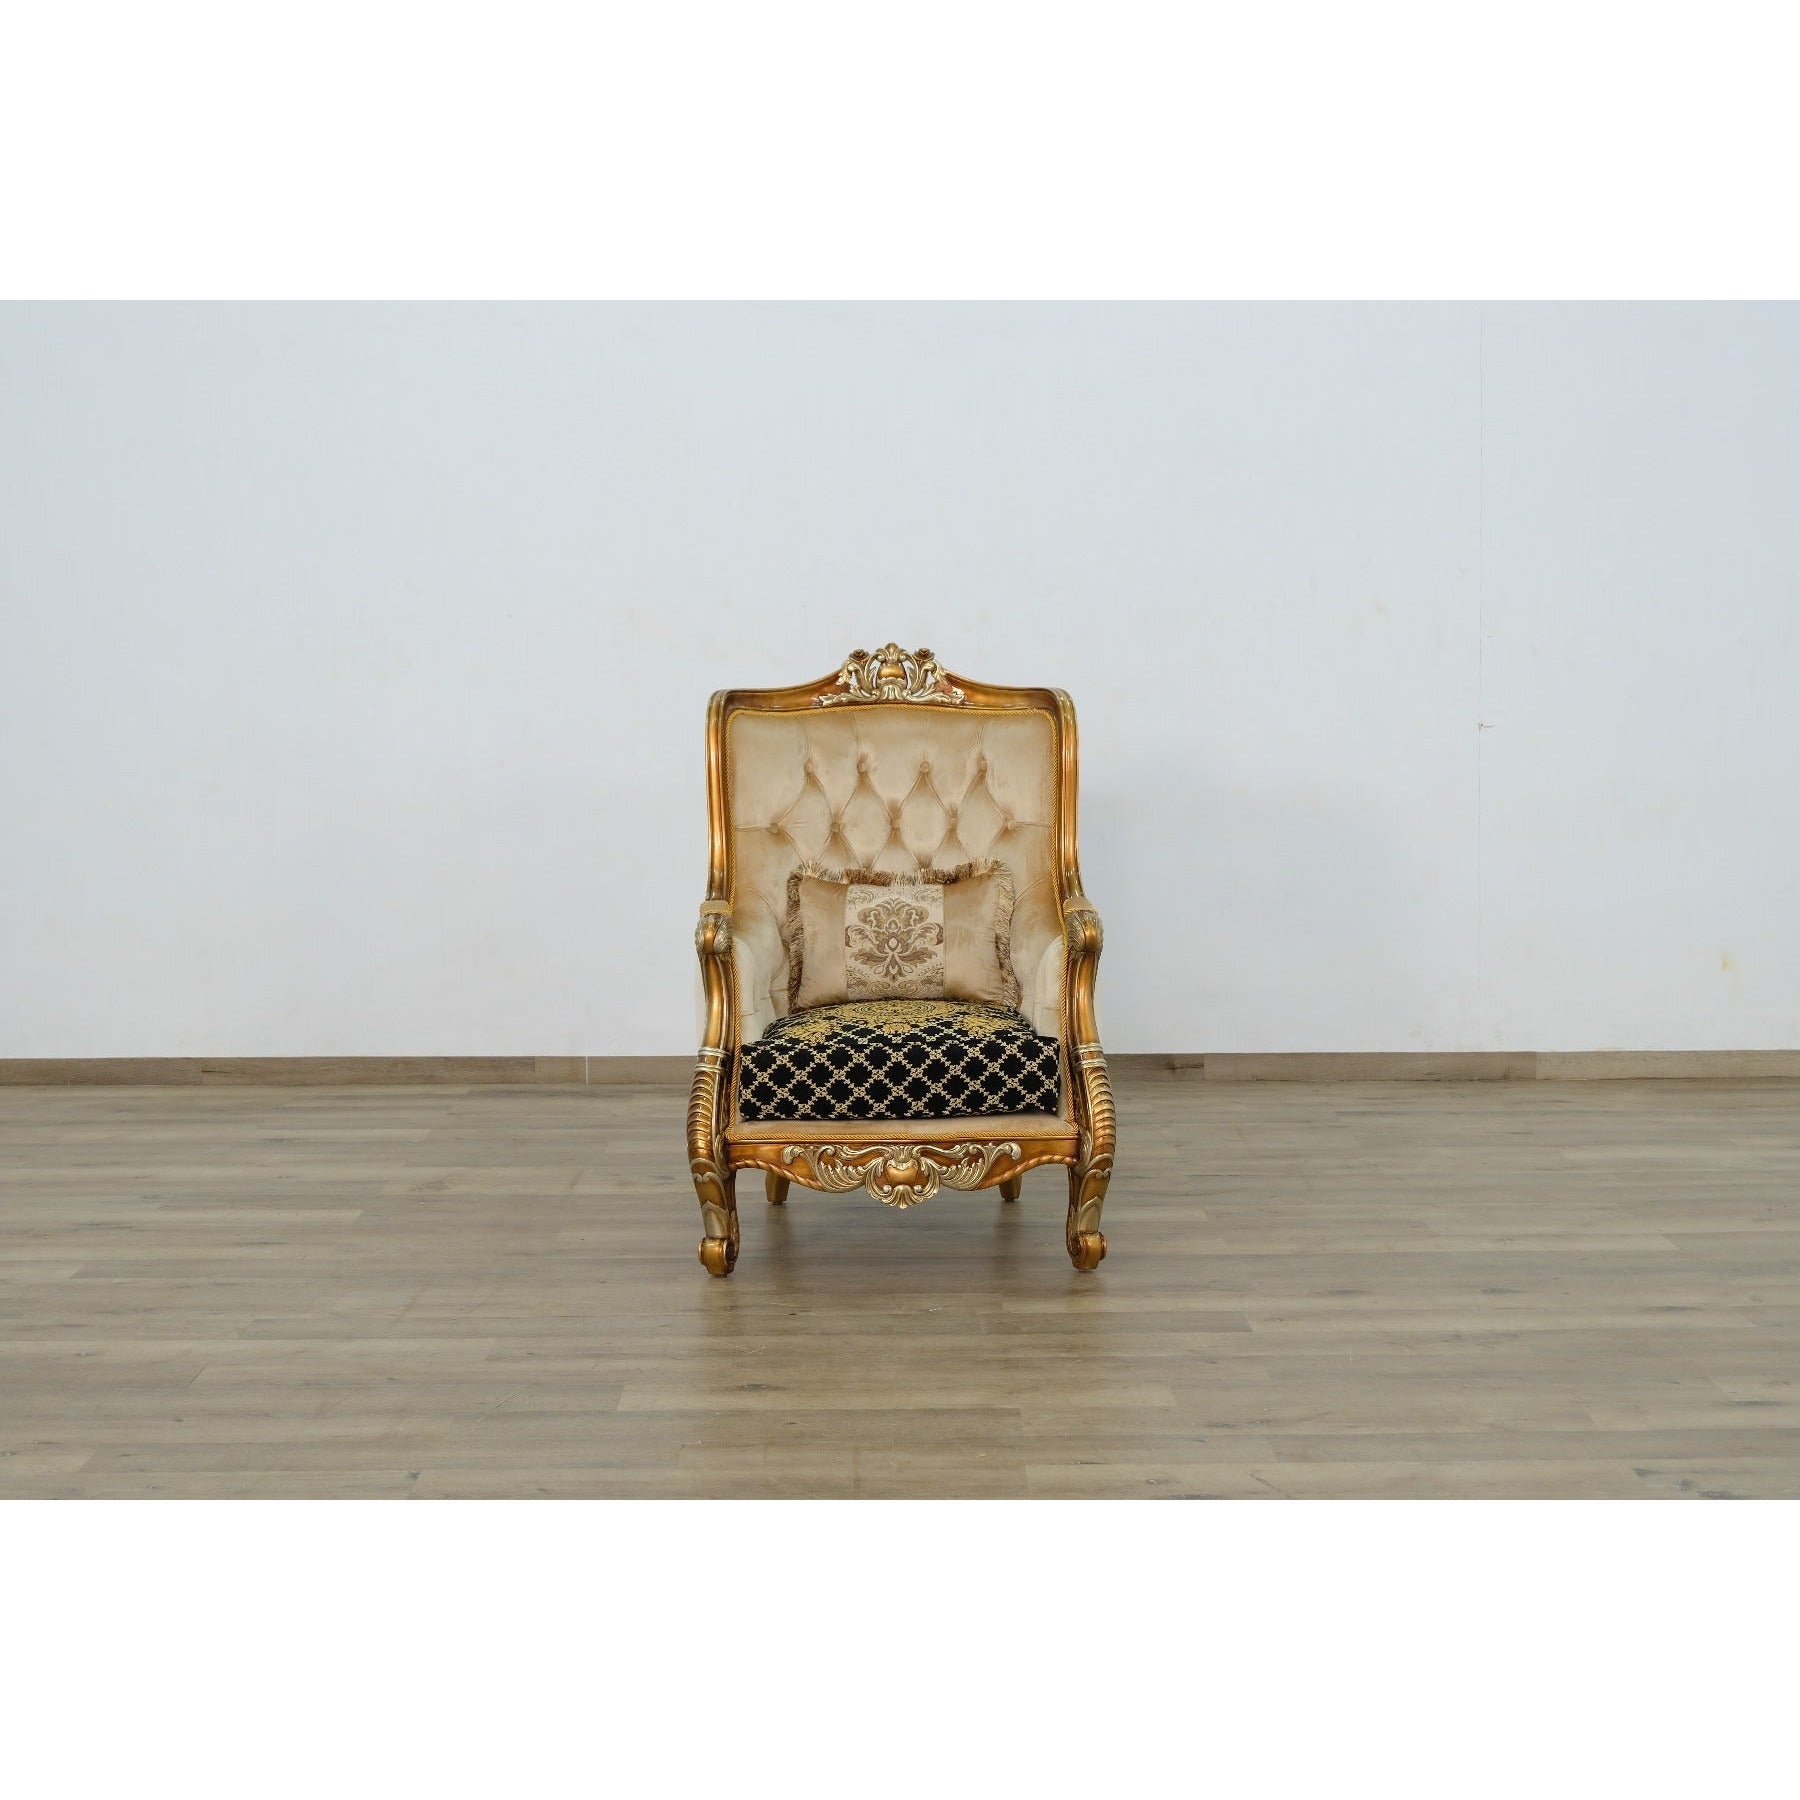 European Furniture - Luxor II 3 Piece Living Room Set in Black Gold - 68586-3SET - New Star Living